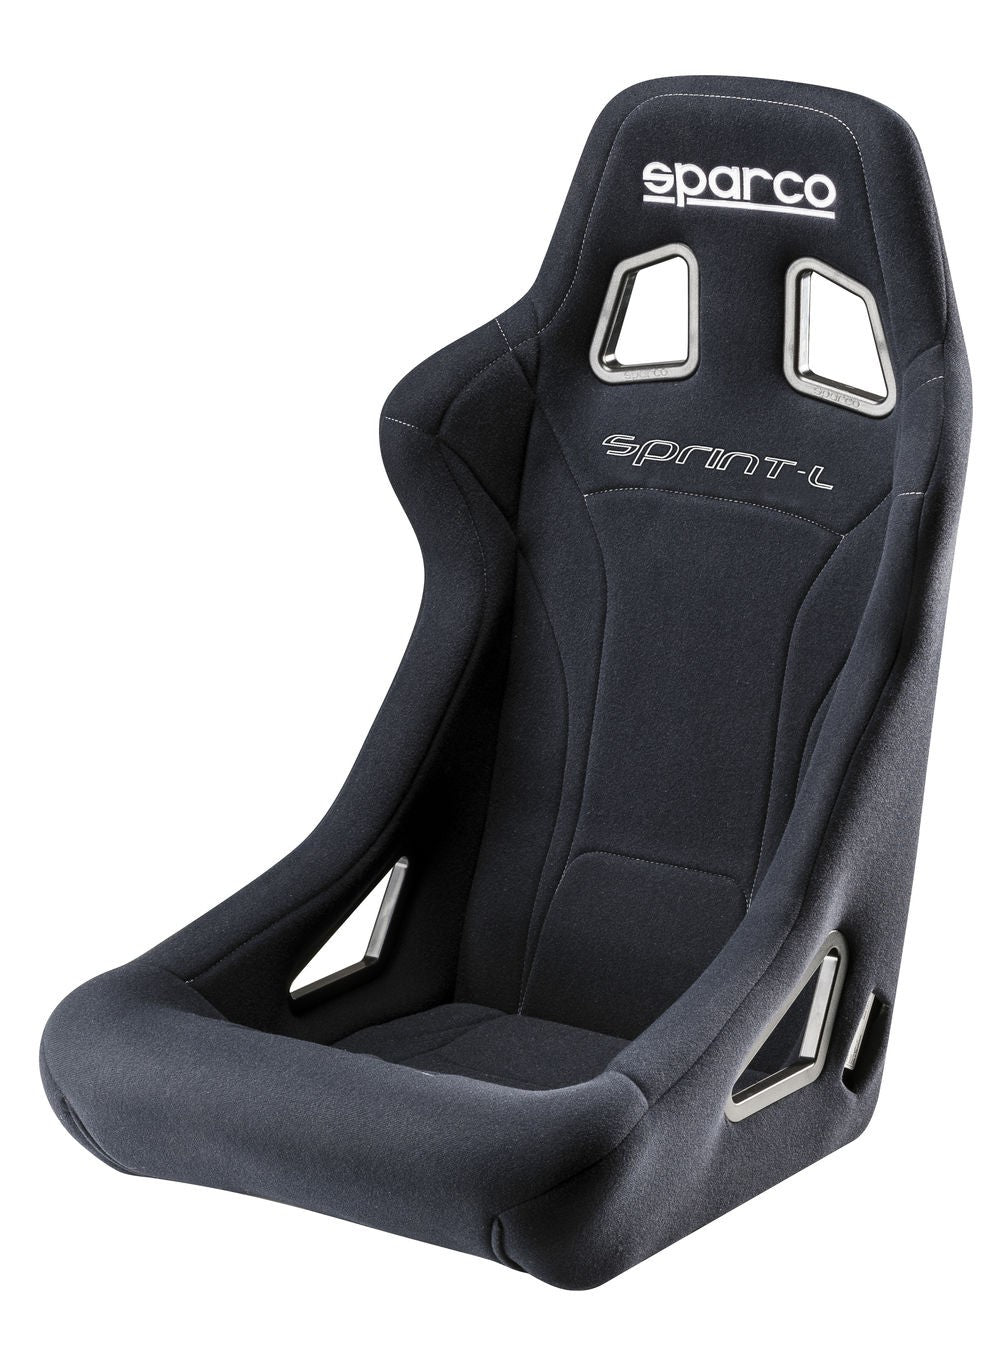 Sparco Universal Racing/Bucket Seat Sprint L Black incl FIA